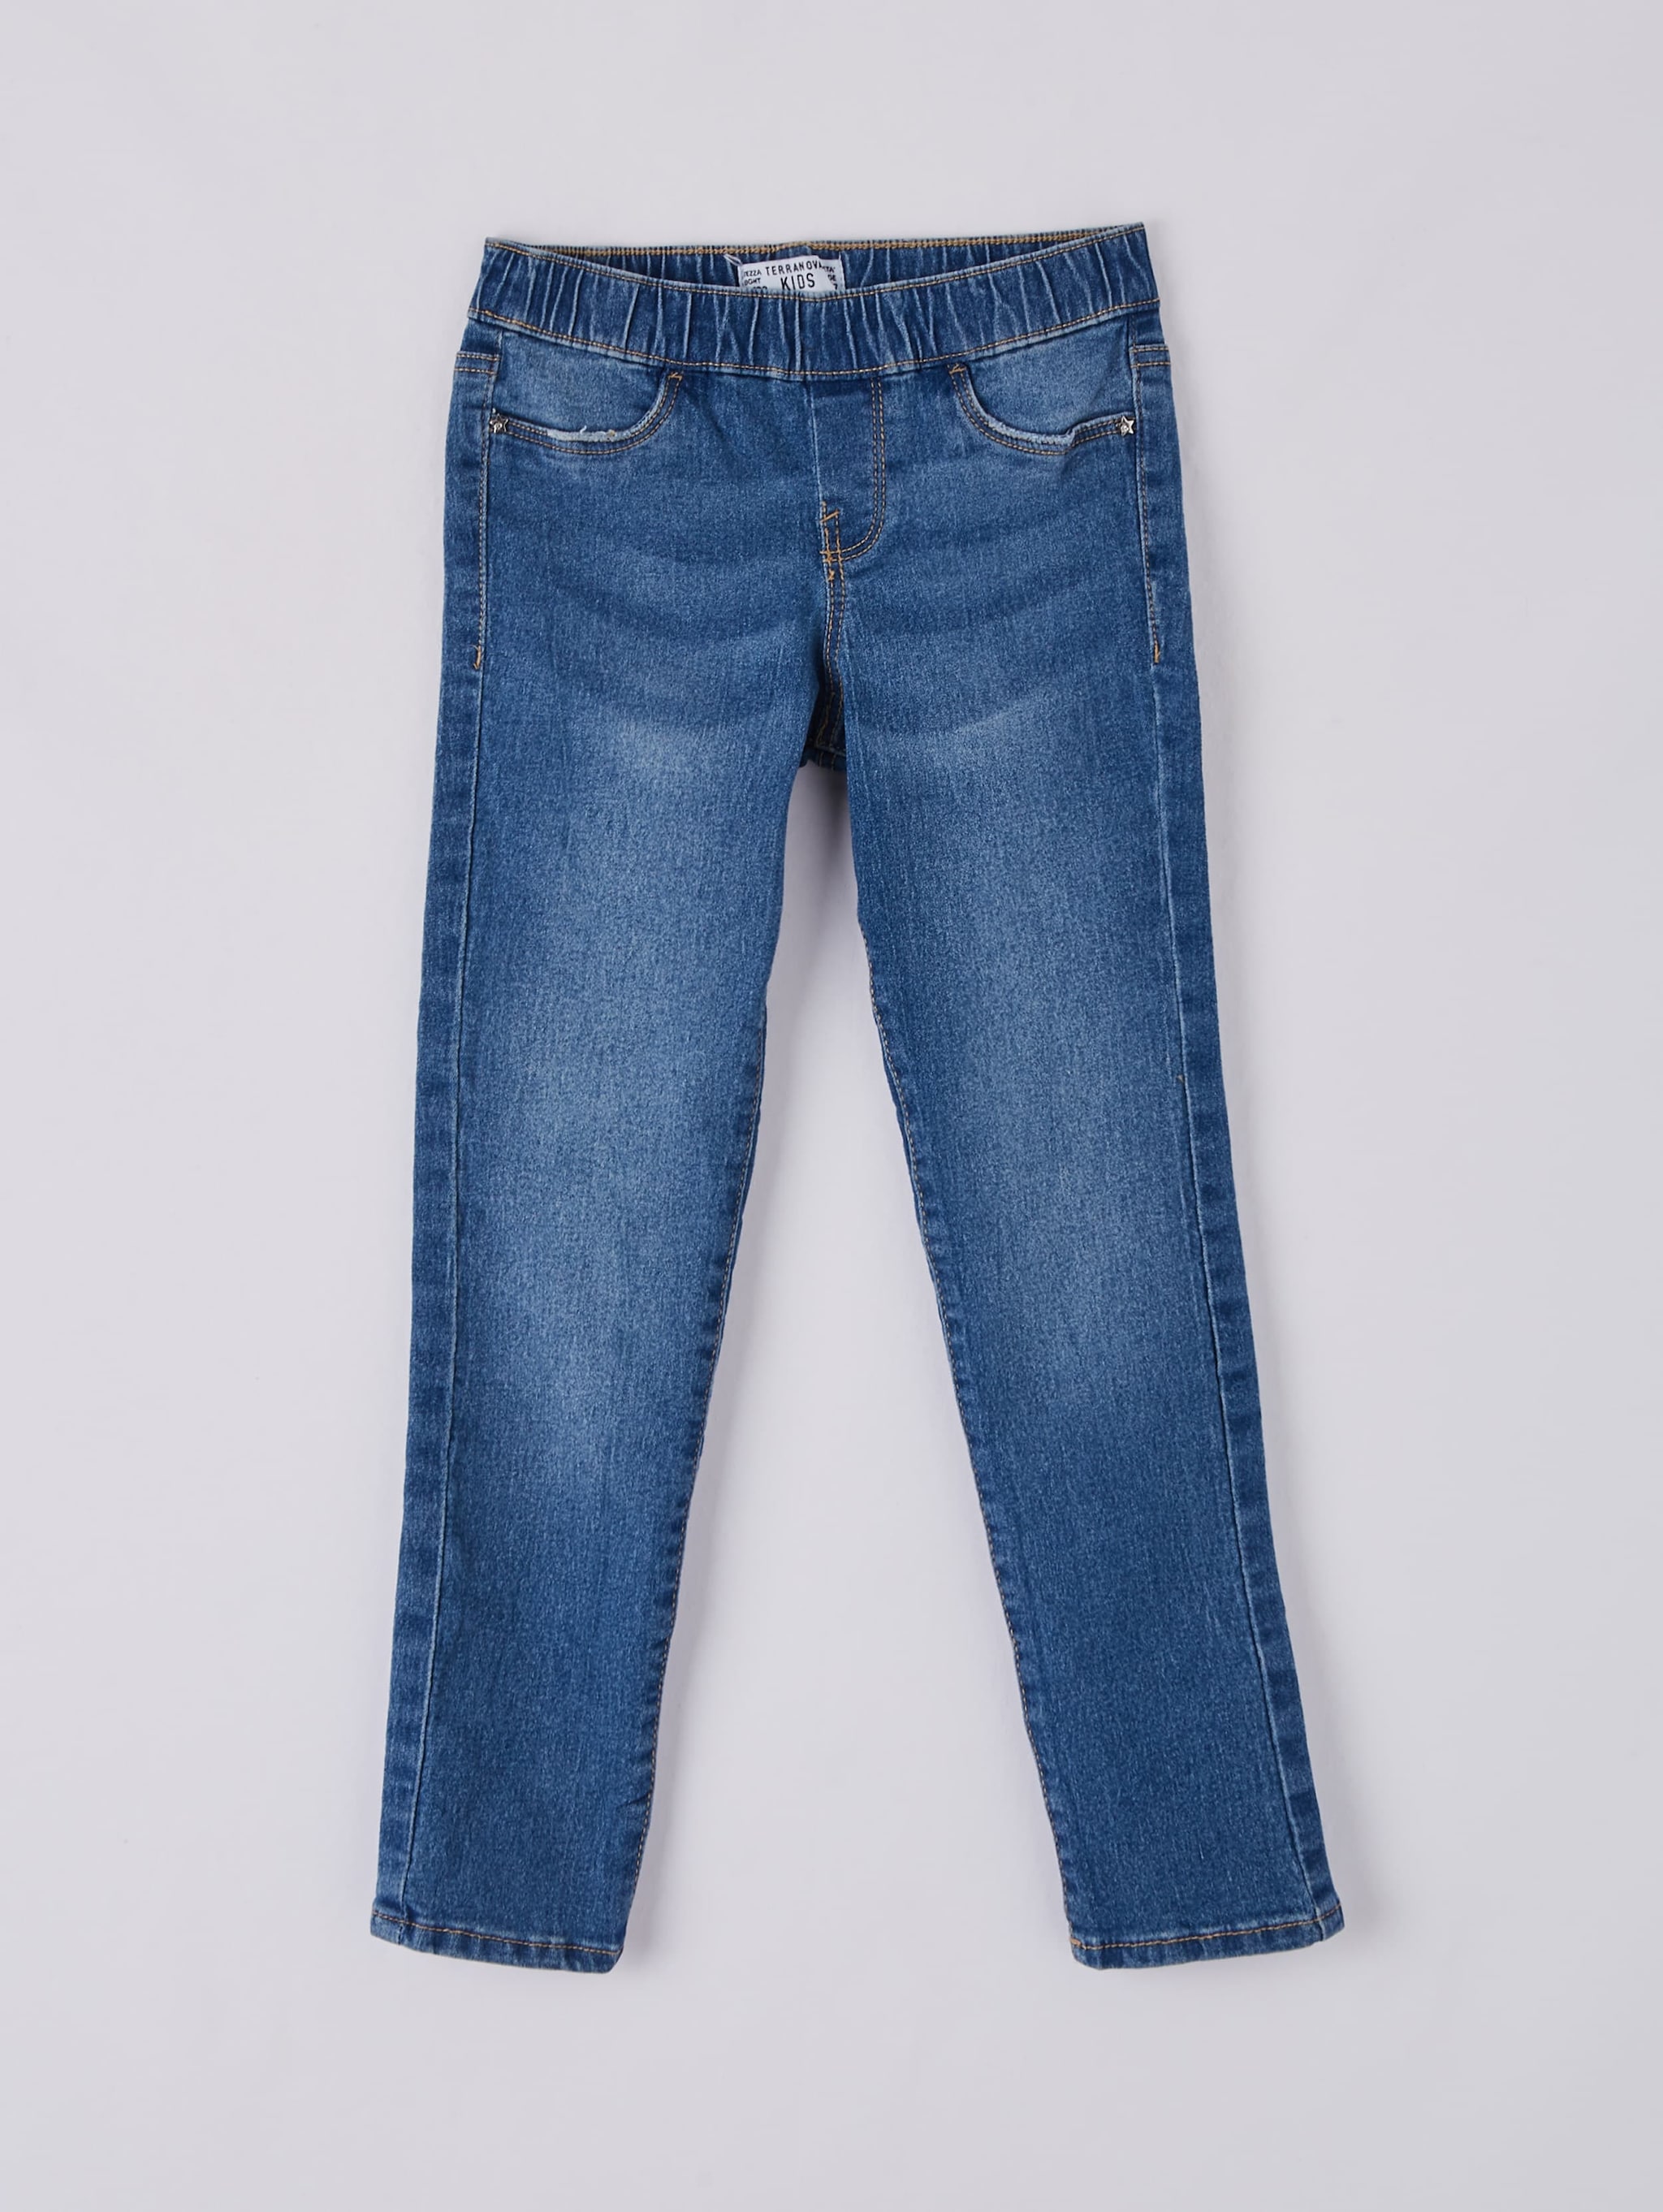 blue jeans jeggings